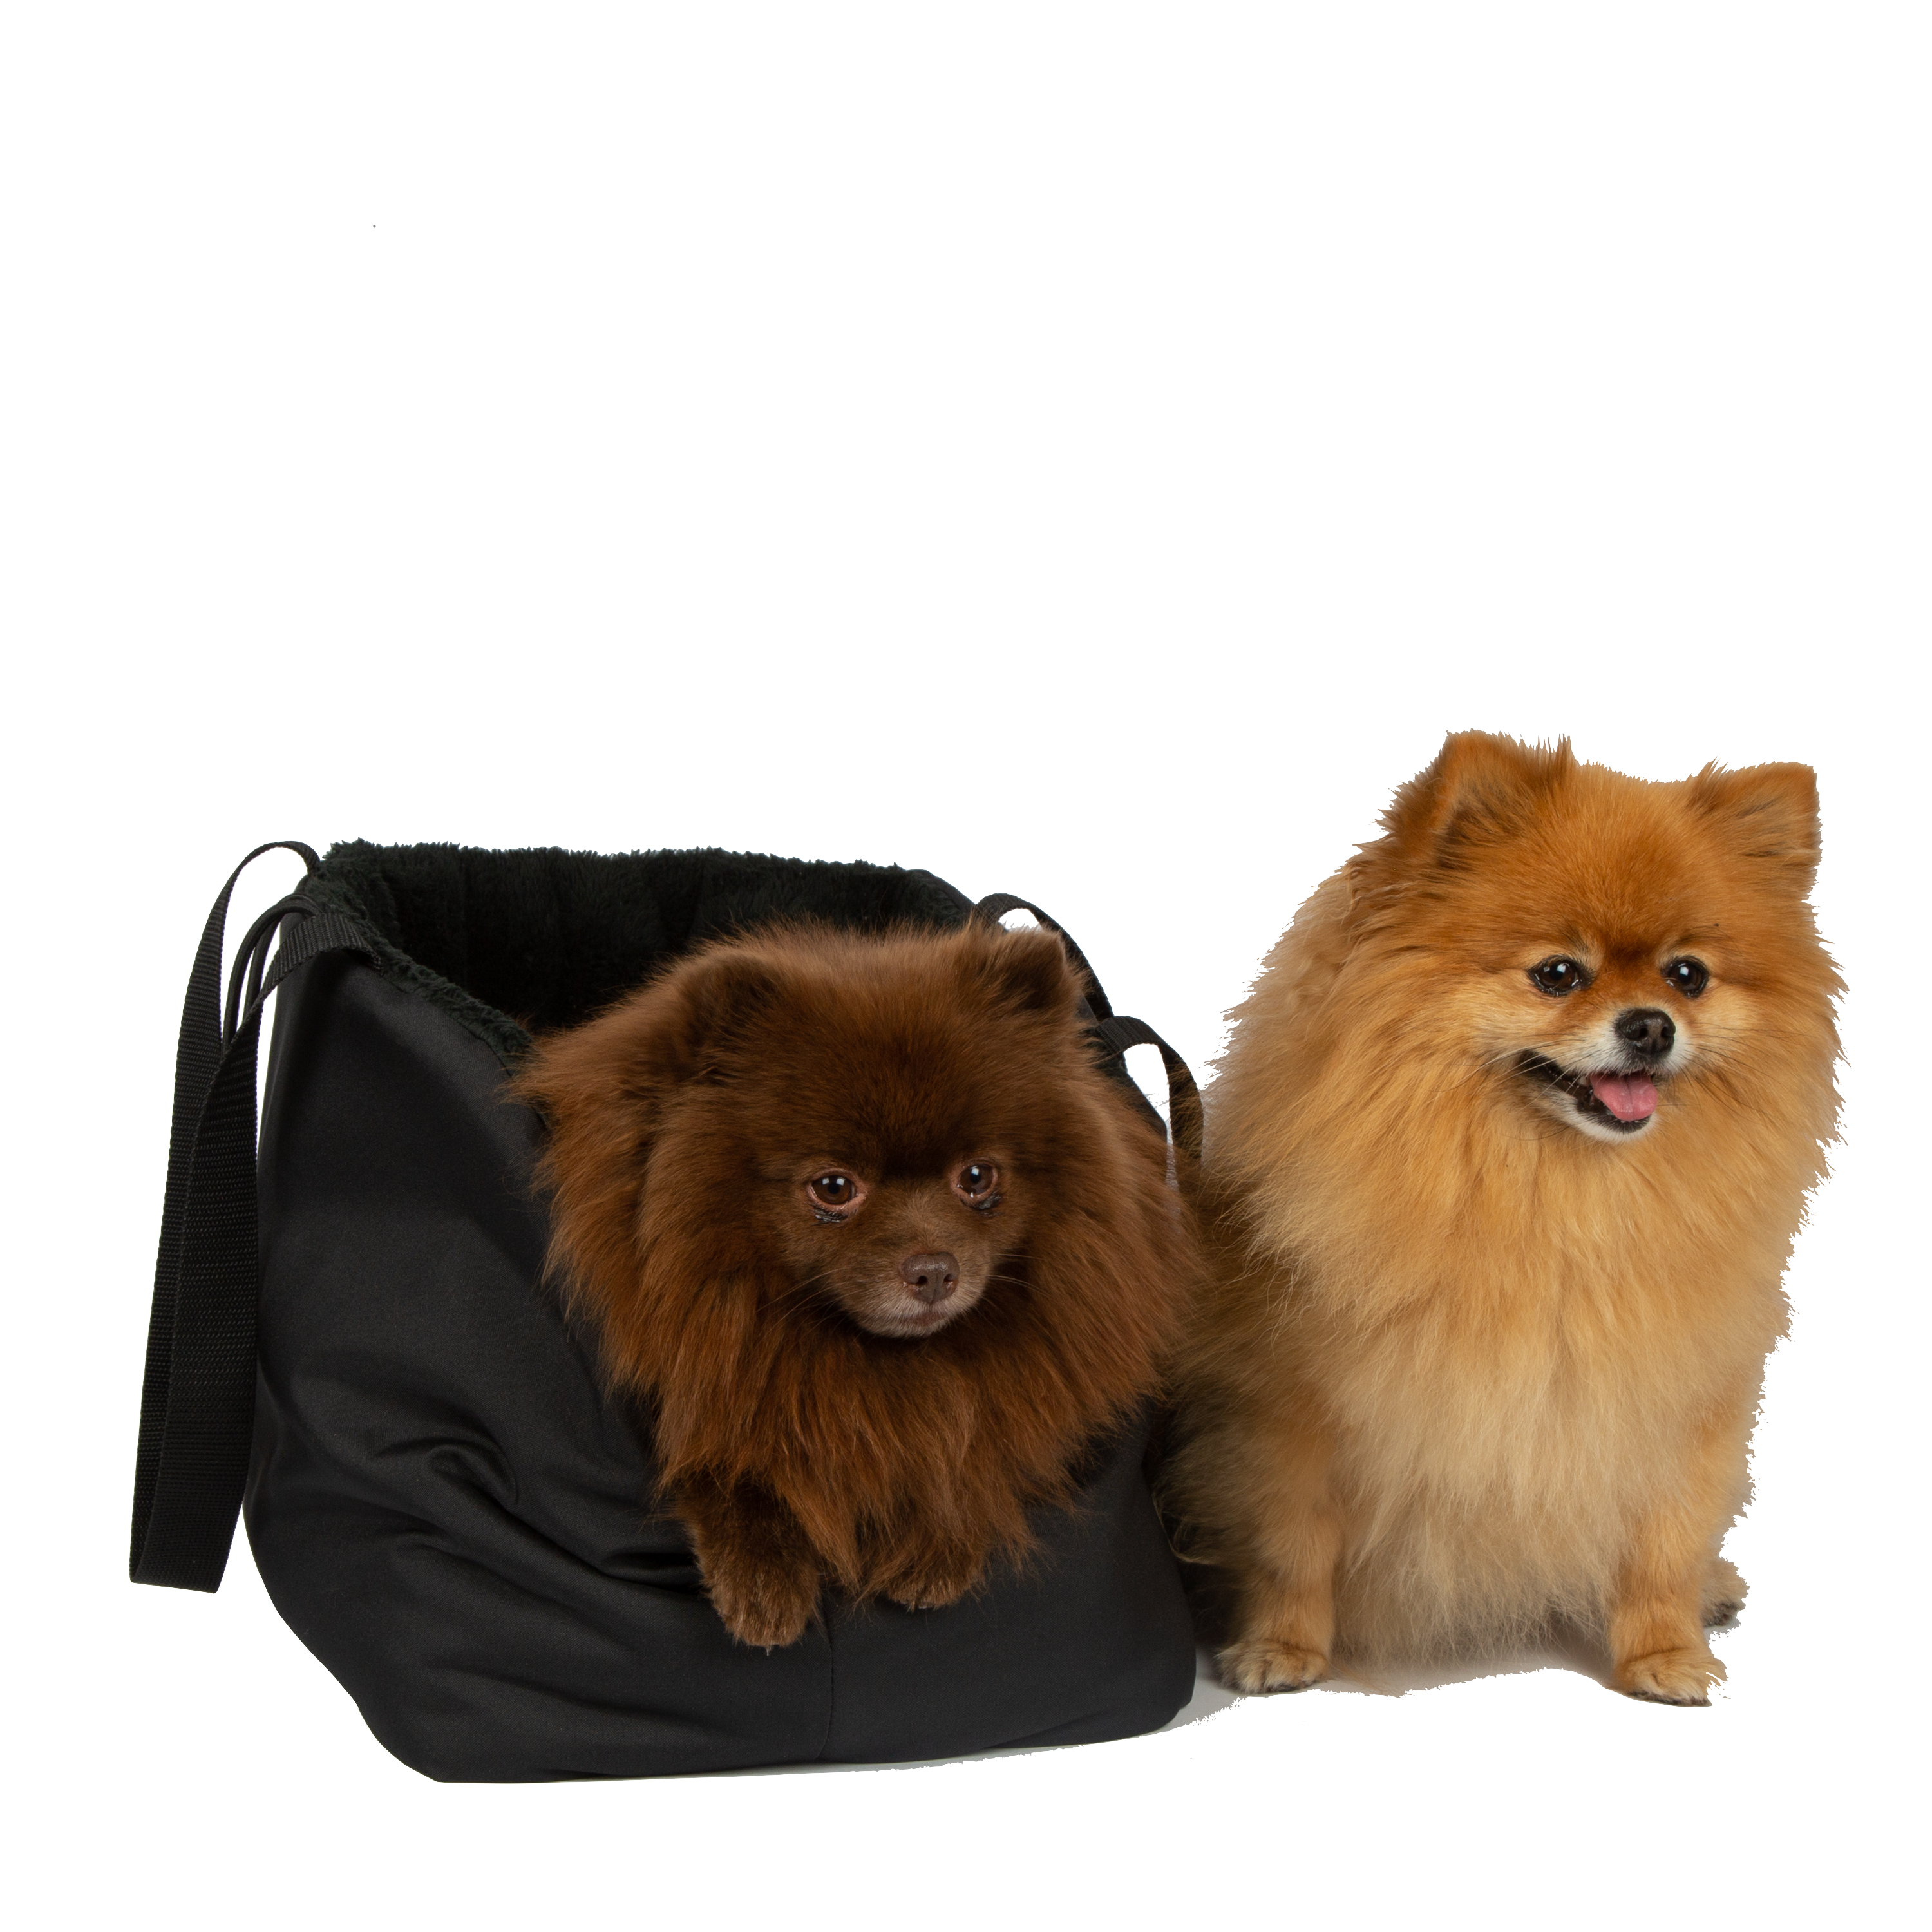 Dog Carrier Bag Rainy Bear Black by SohoPoms